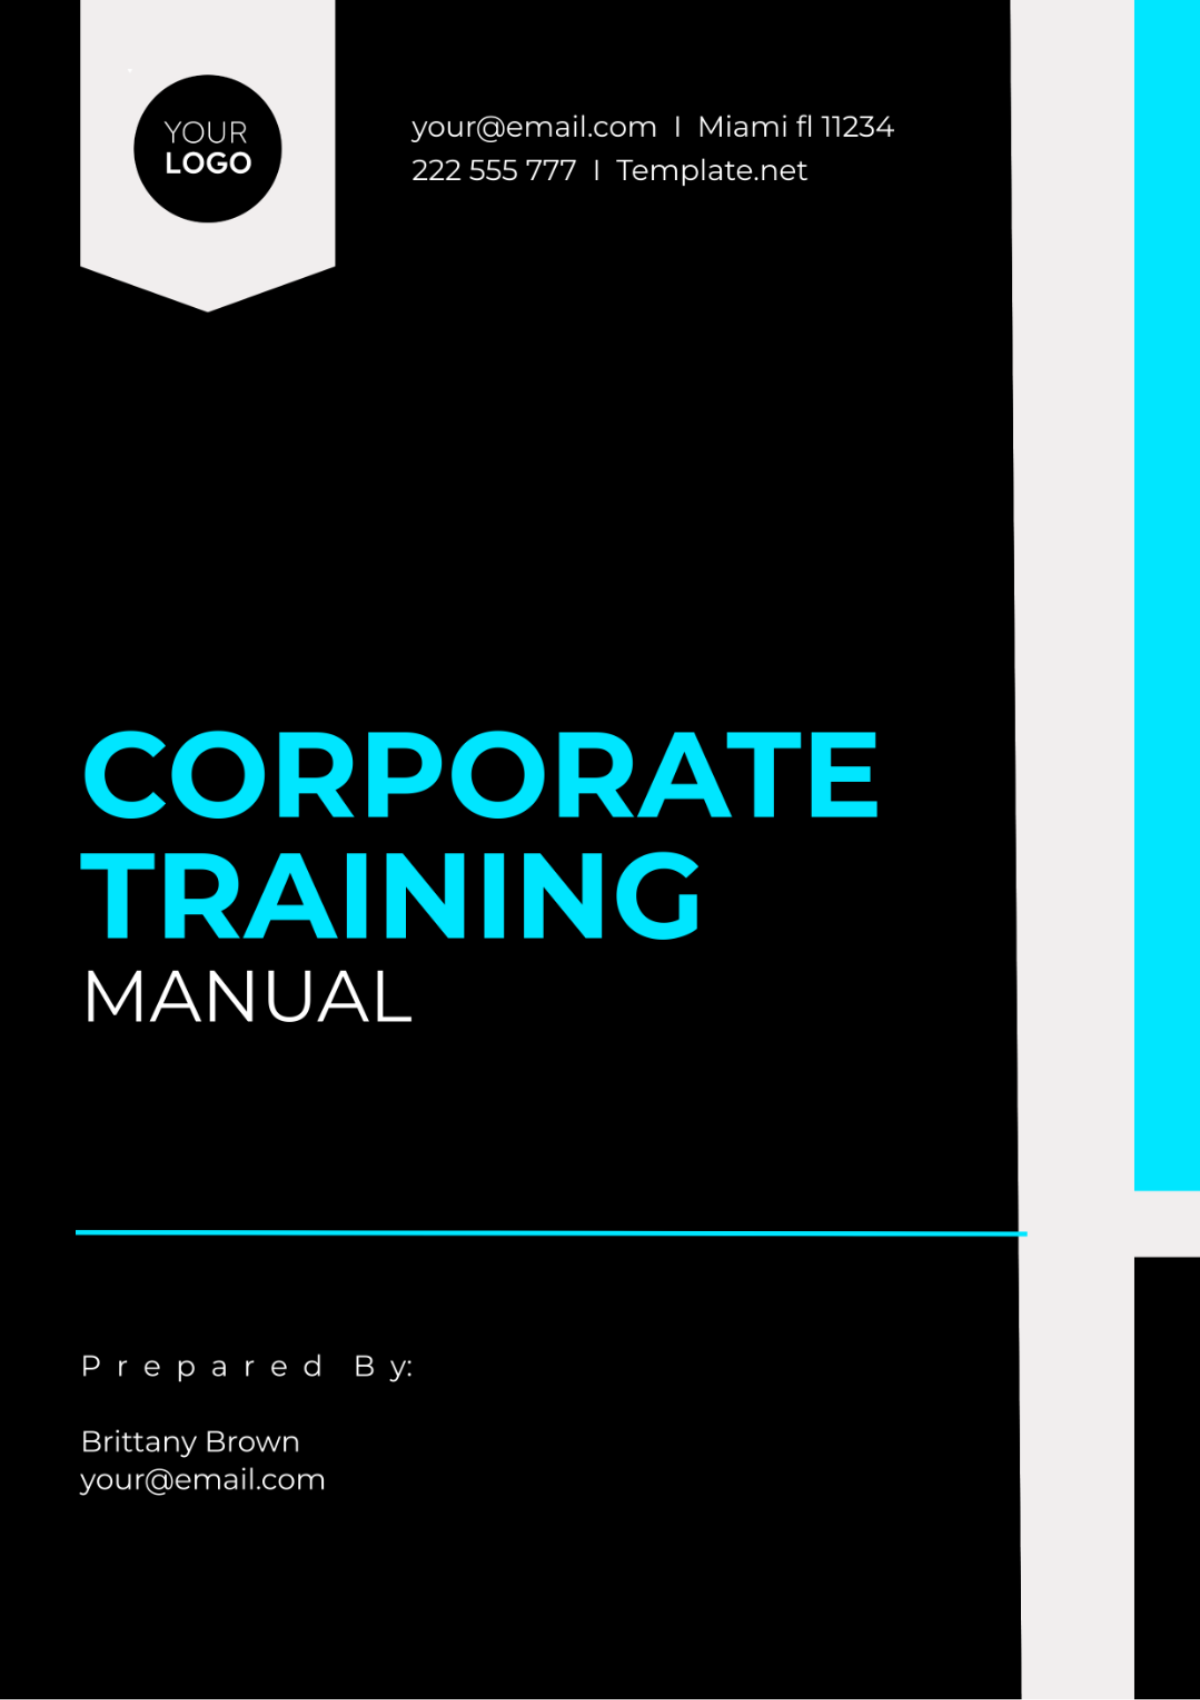 Corporate Training Manual Template